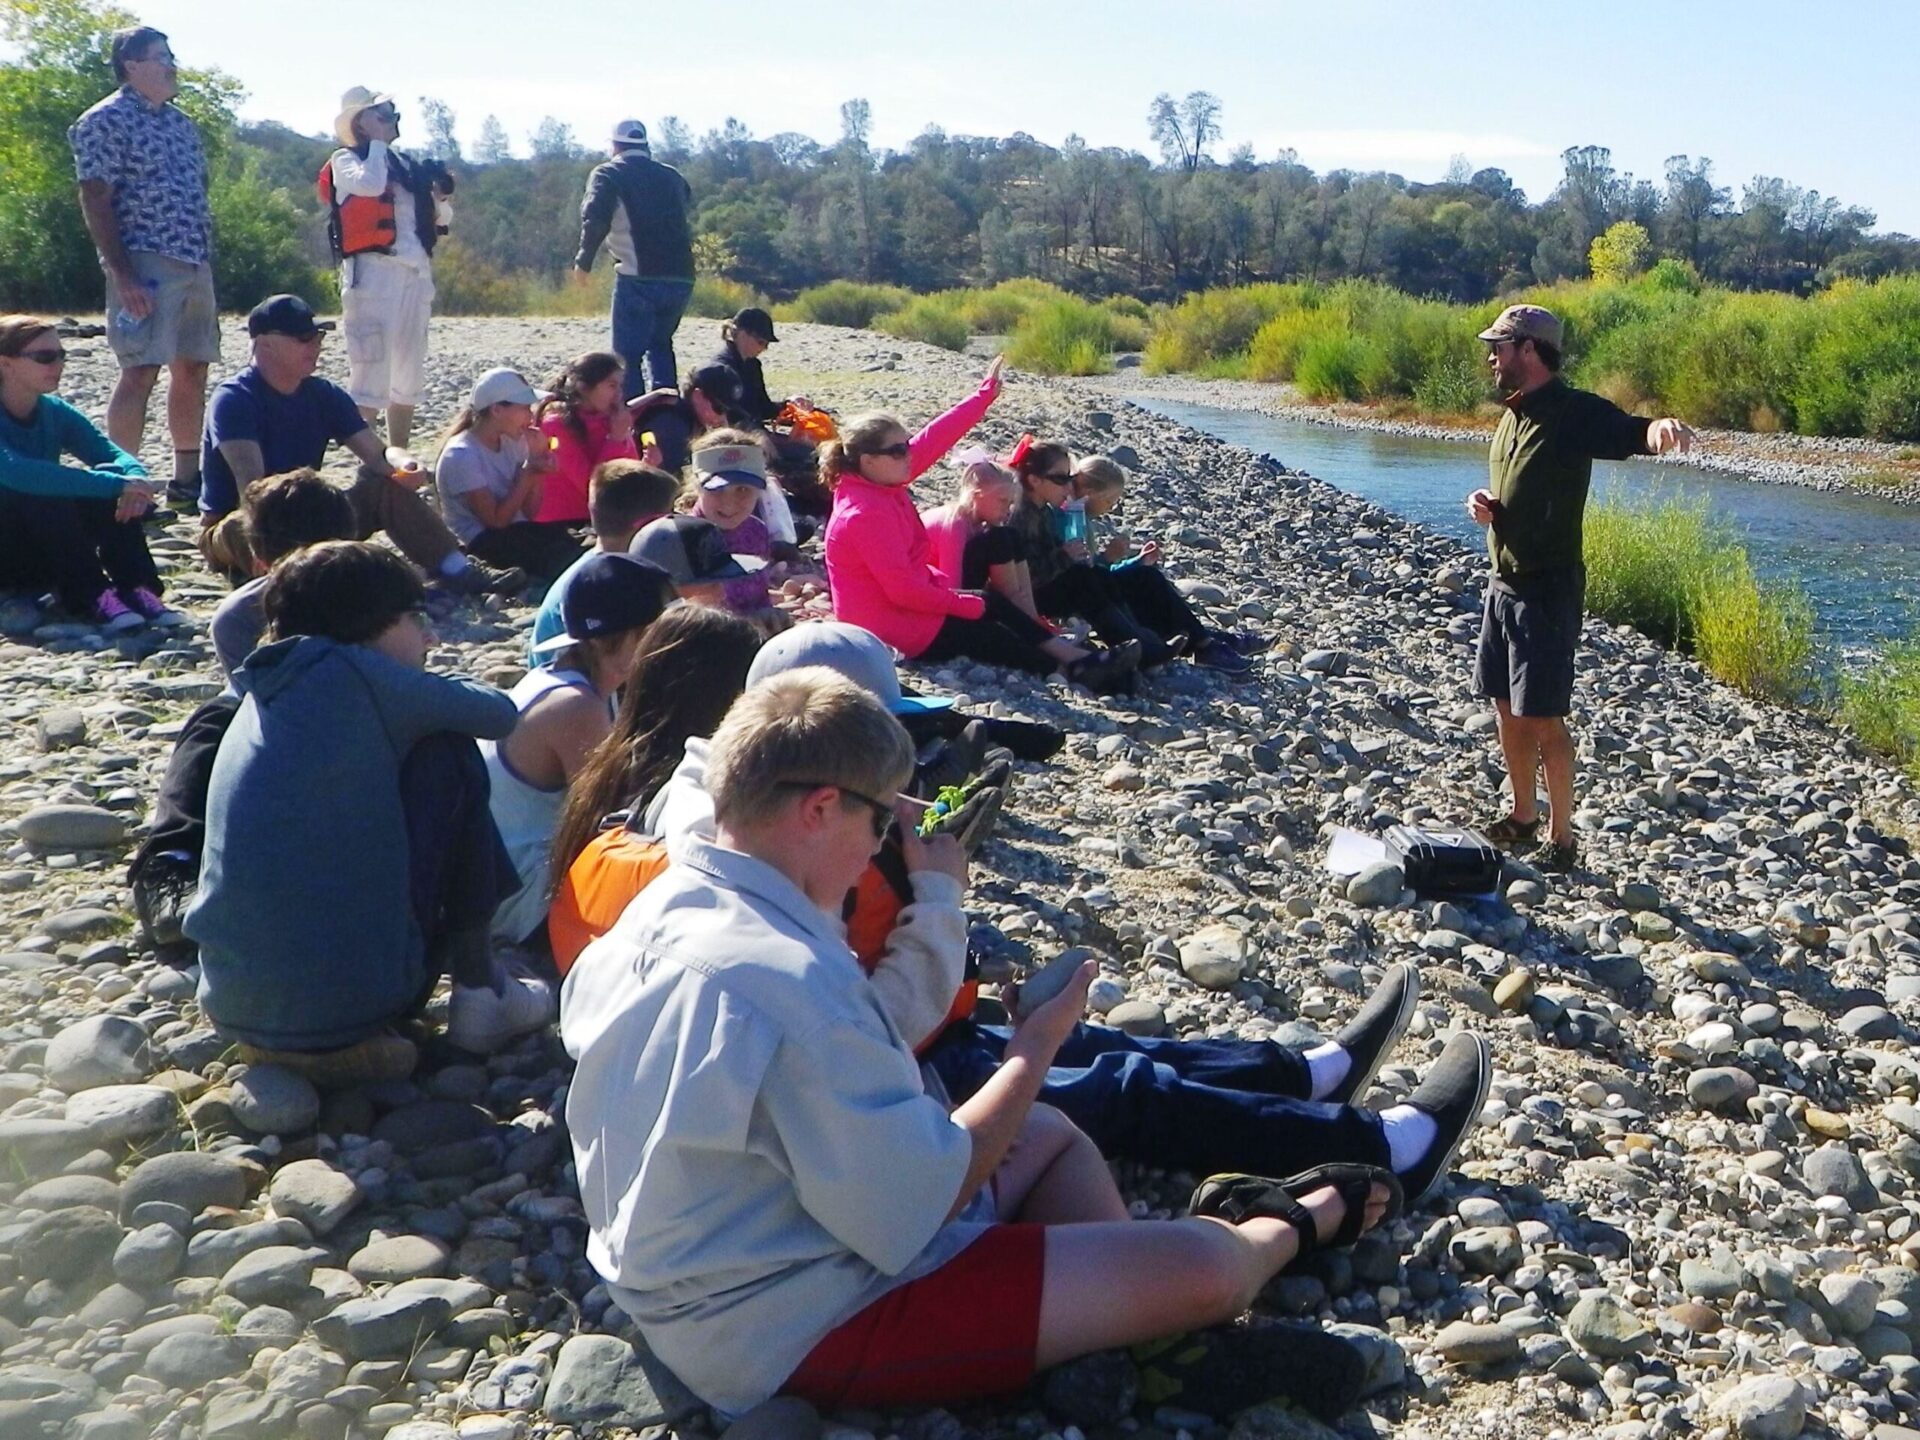 Salmon life cycle lesson on the Yuba Riverbank (Photo: Kelly Hickman)